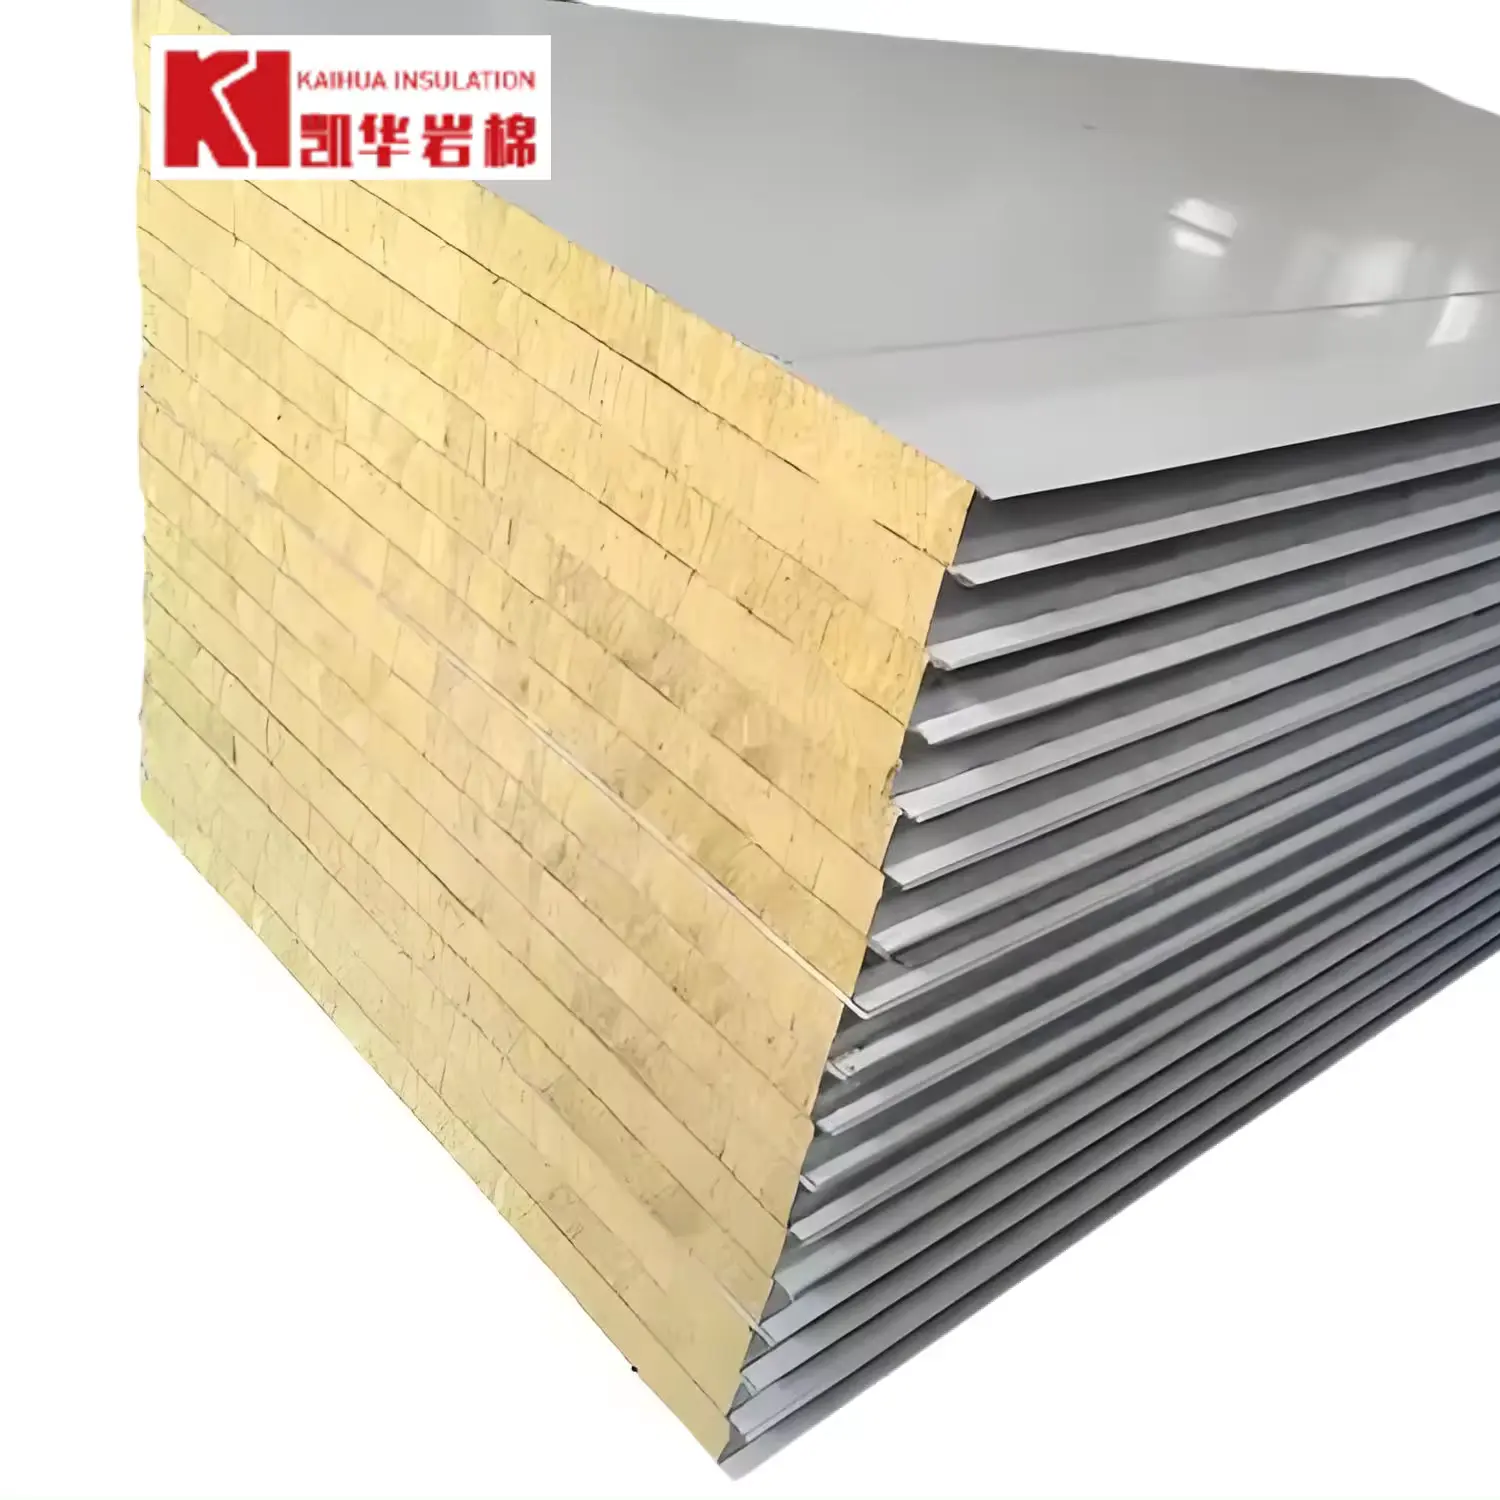 KAIHUA CE certified the most popular basalt insulation material for external wall insulation sandwich plate, 160kg